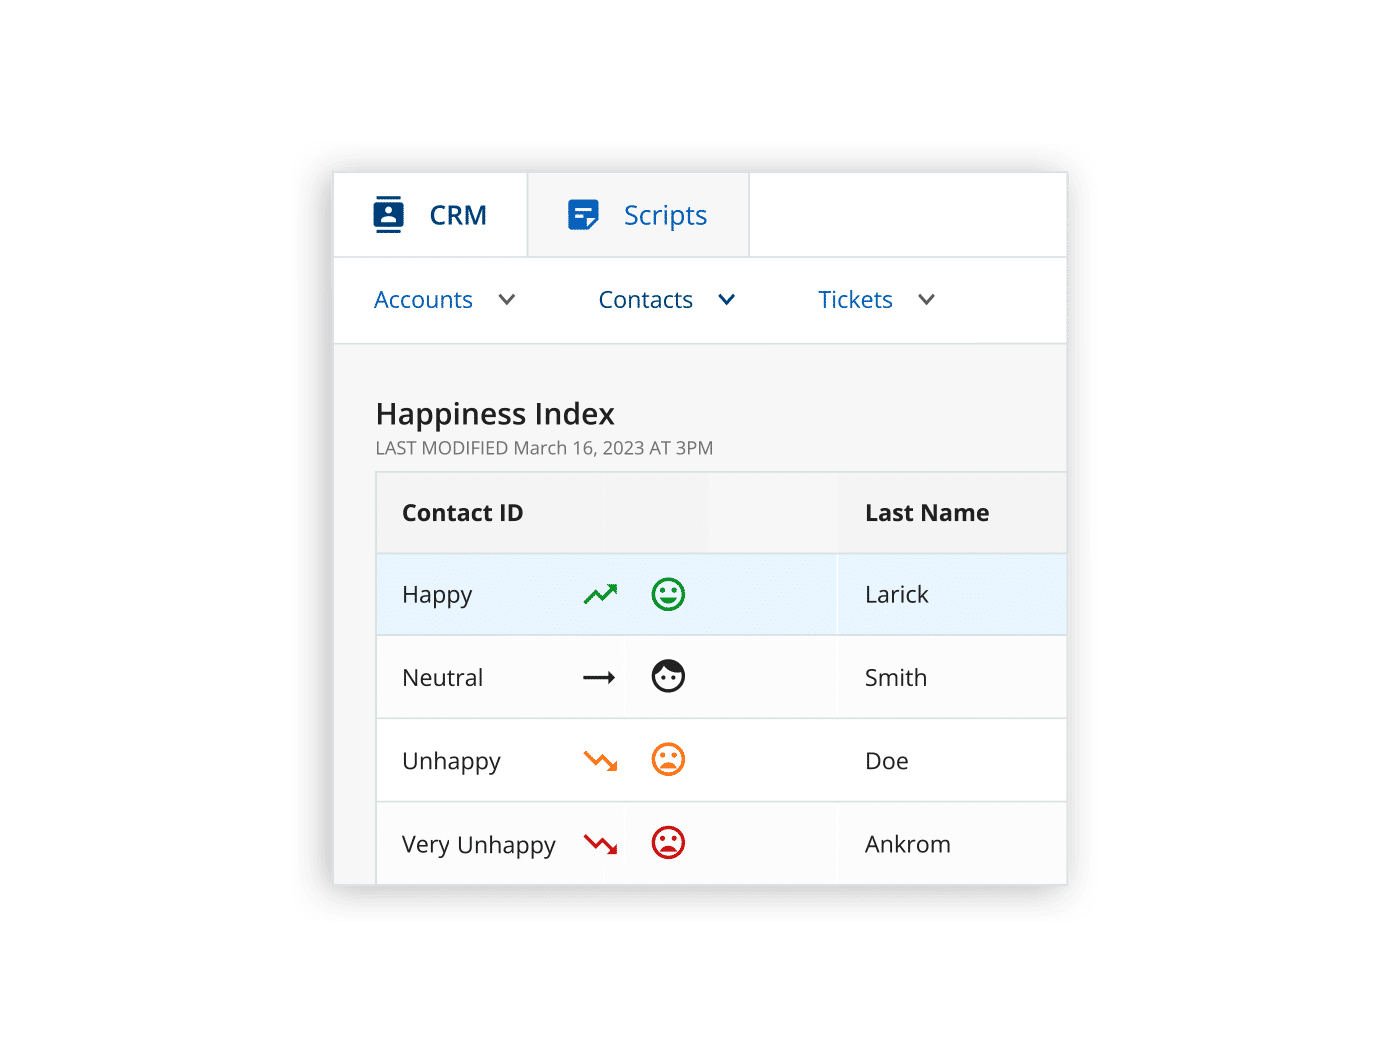 LiveVox [customer happiness index / dashboard